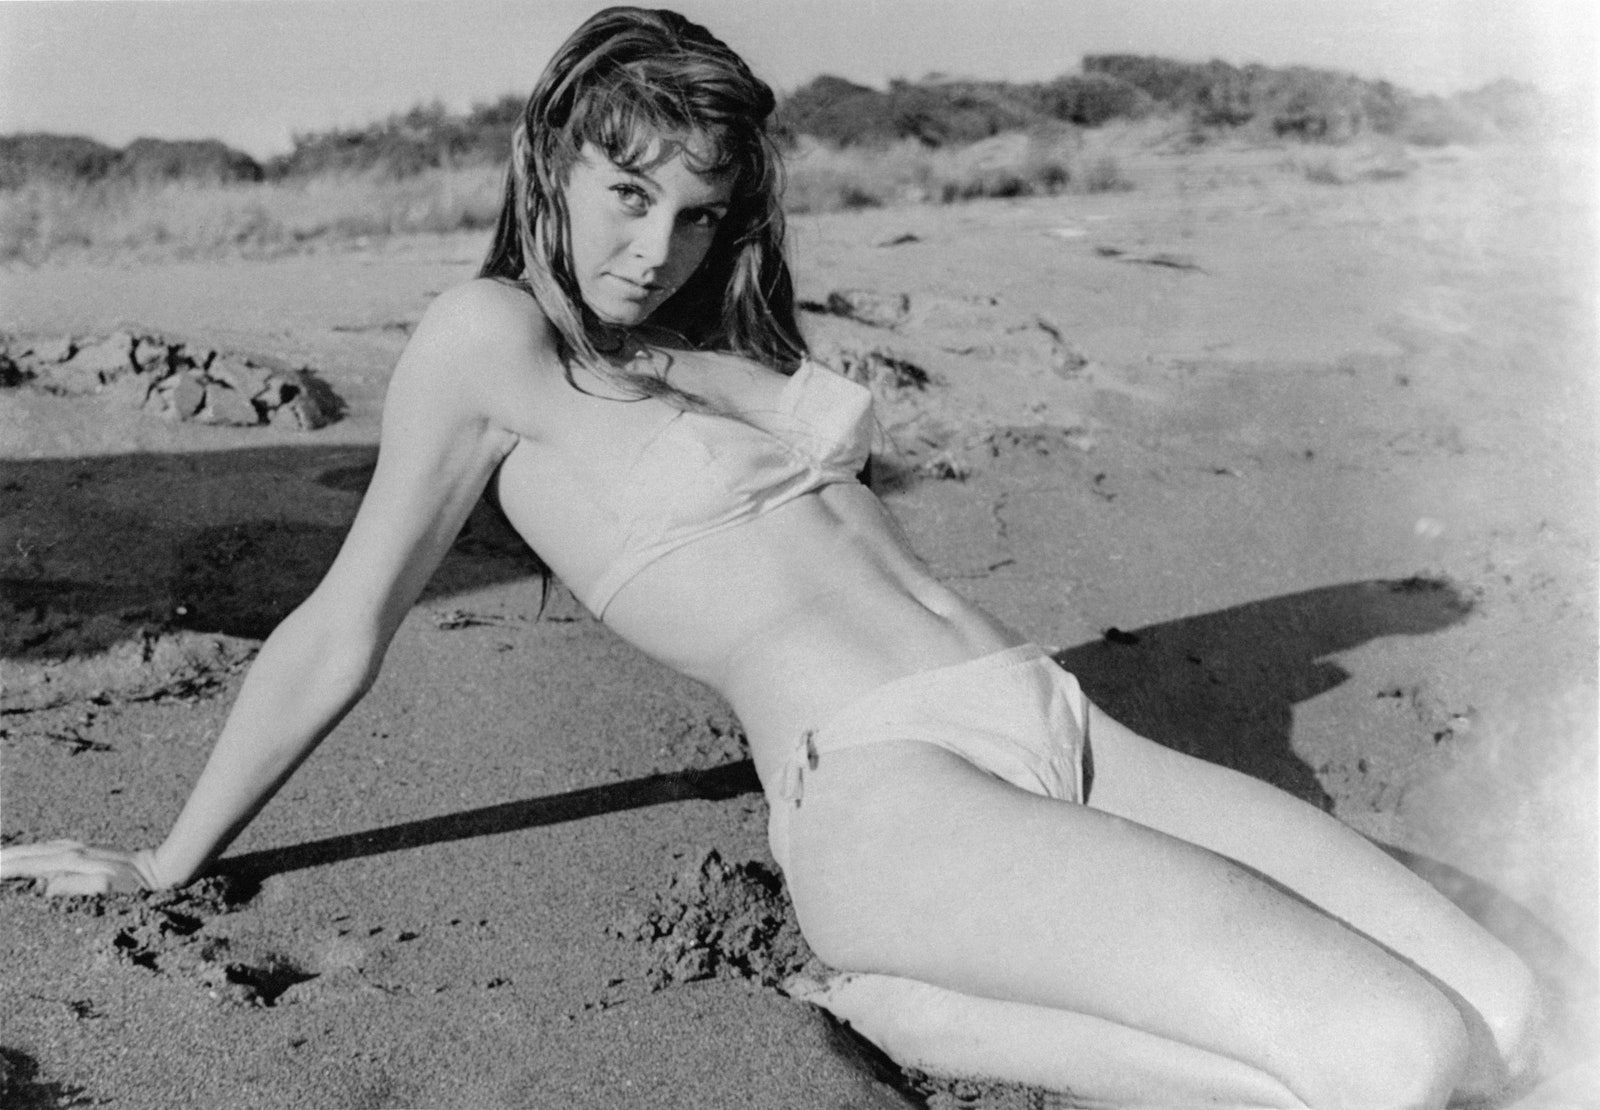 Elegant style icon wardrobe essentials: Brigitte Bardot in swimwear, a two piece bikini in white